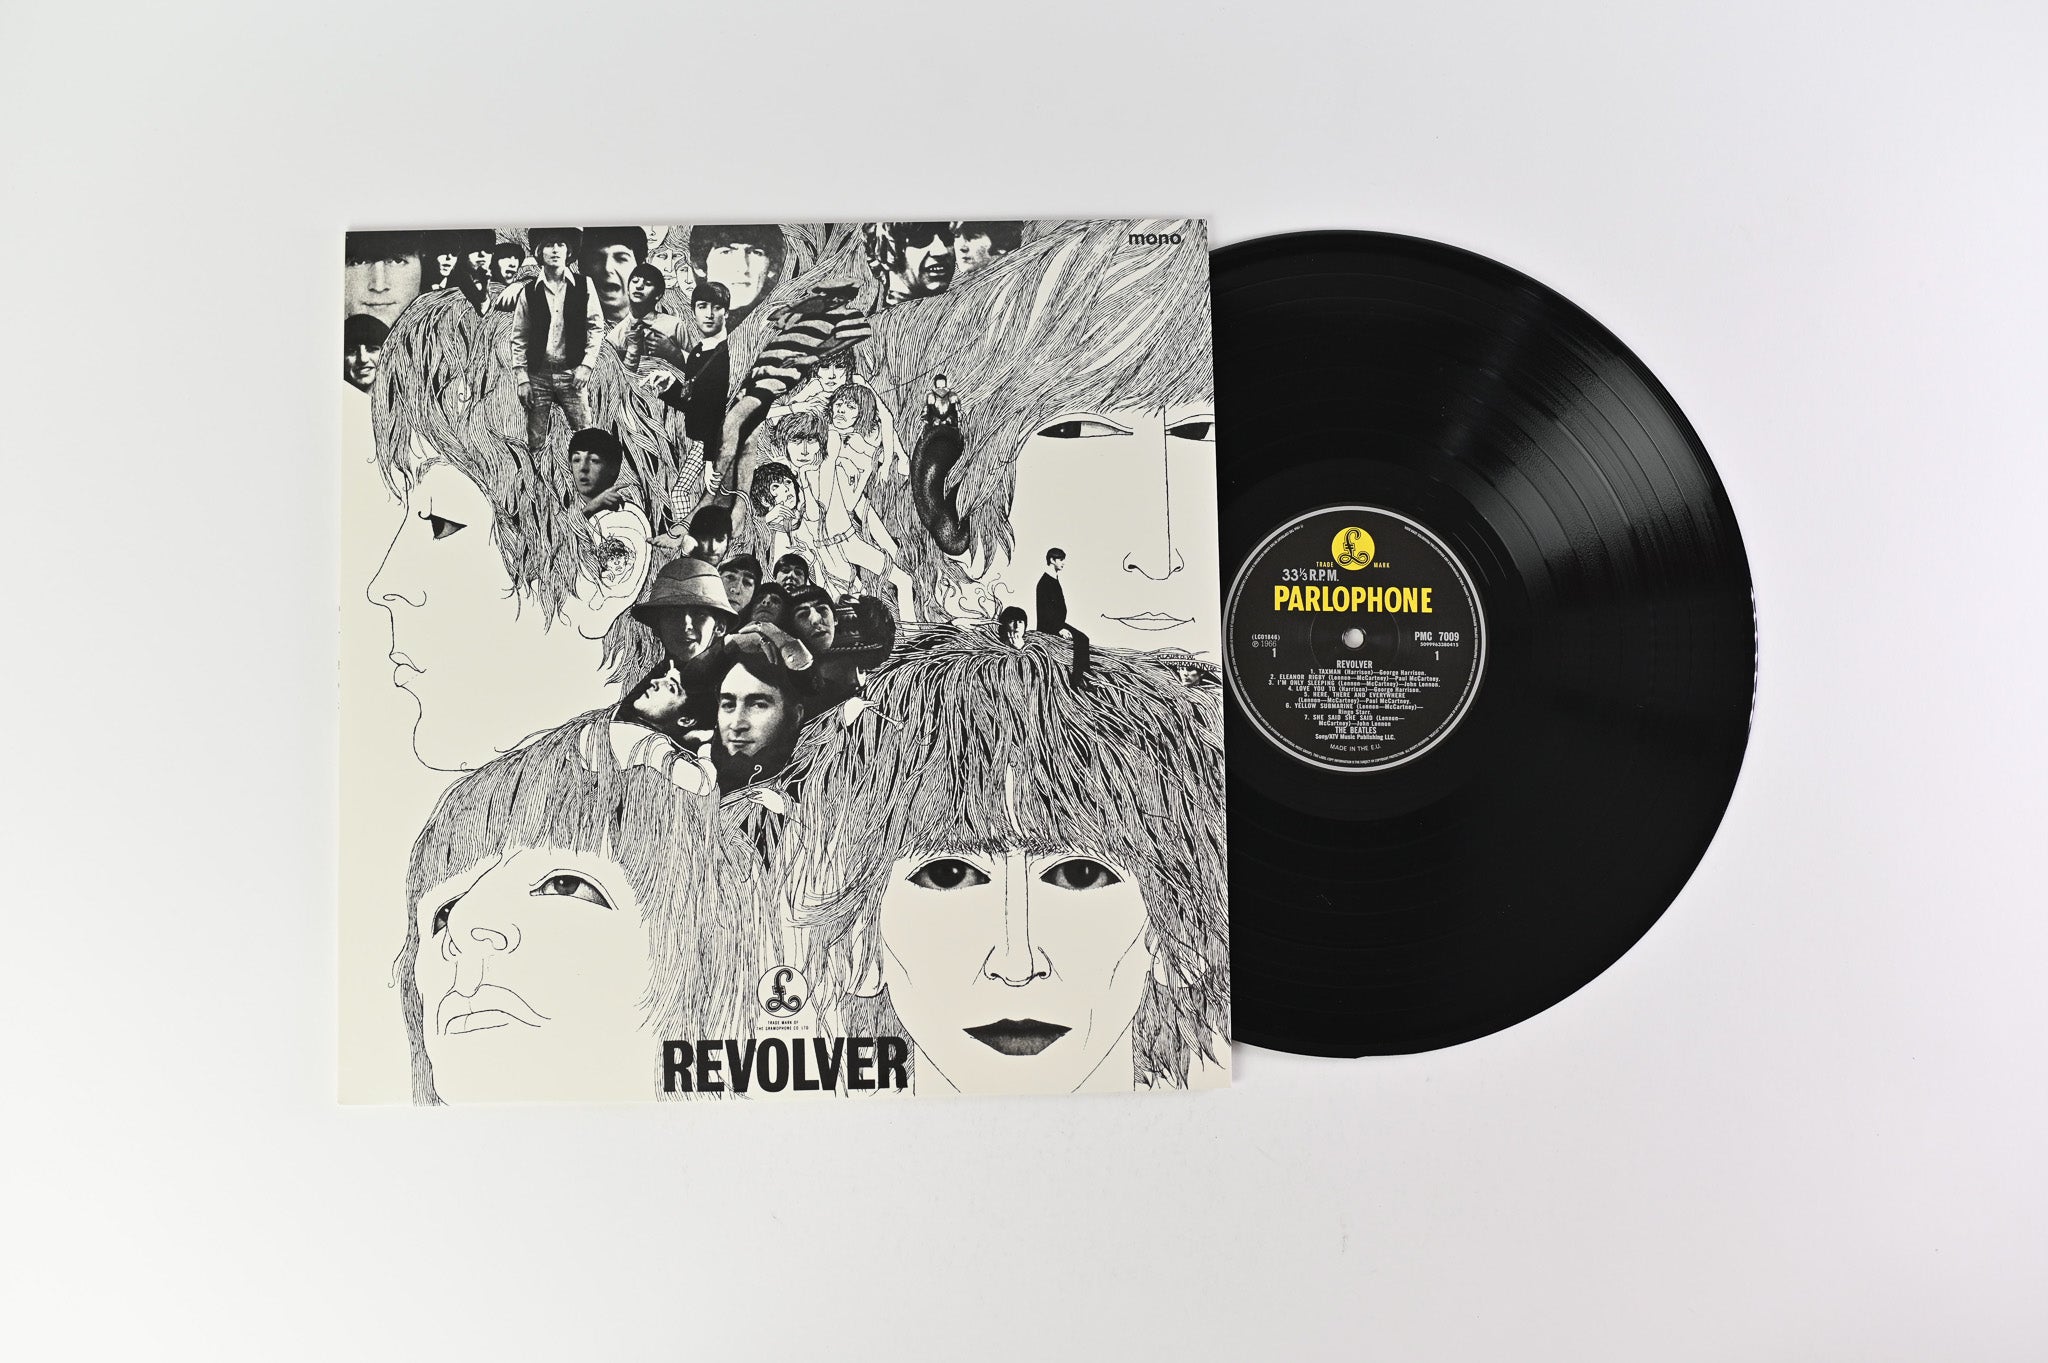 The Beatles - Revolver Mono Reissue on Parlophone